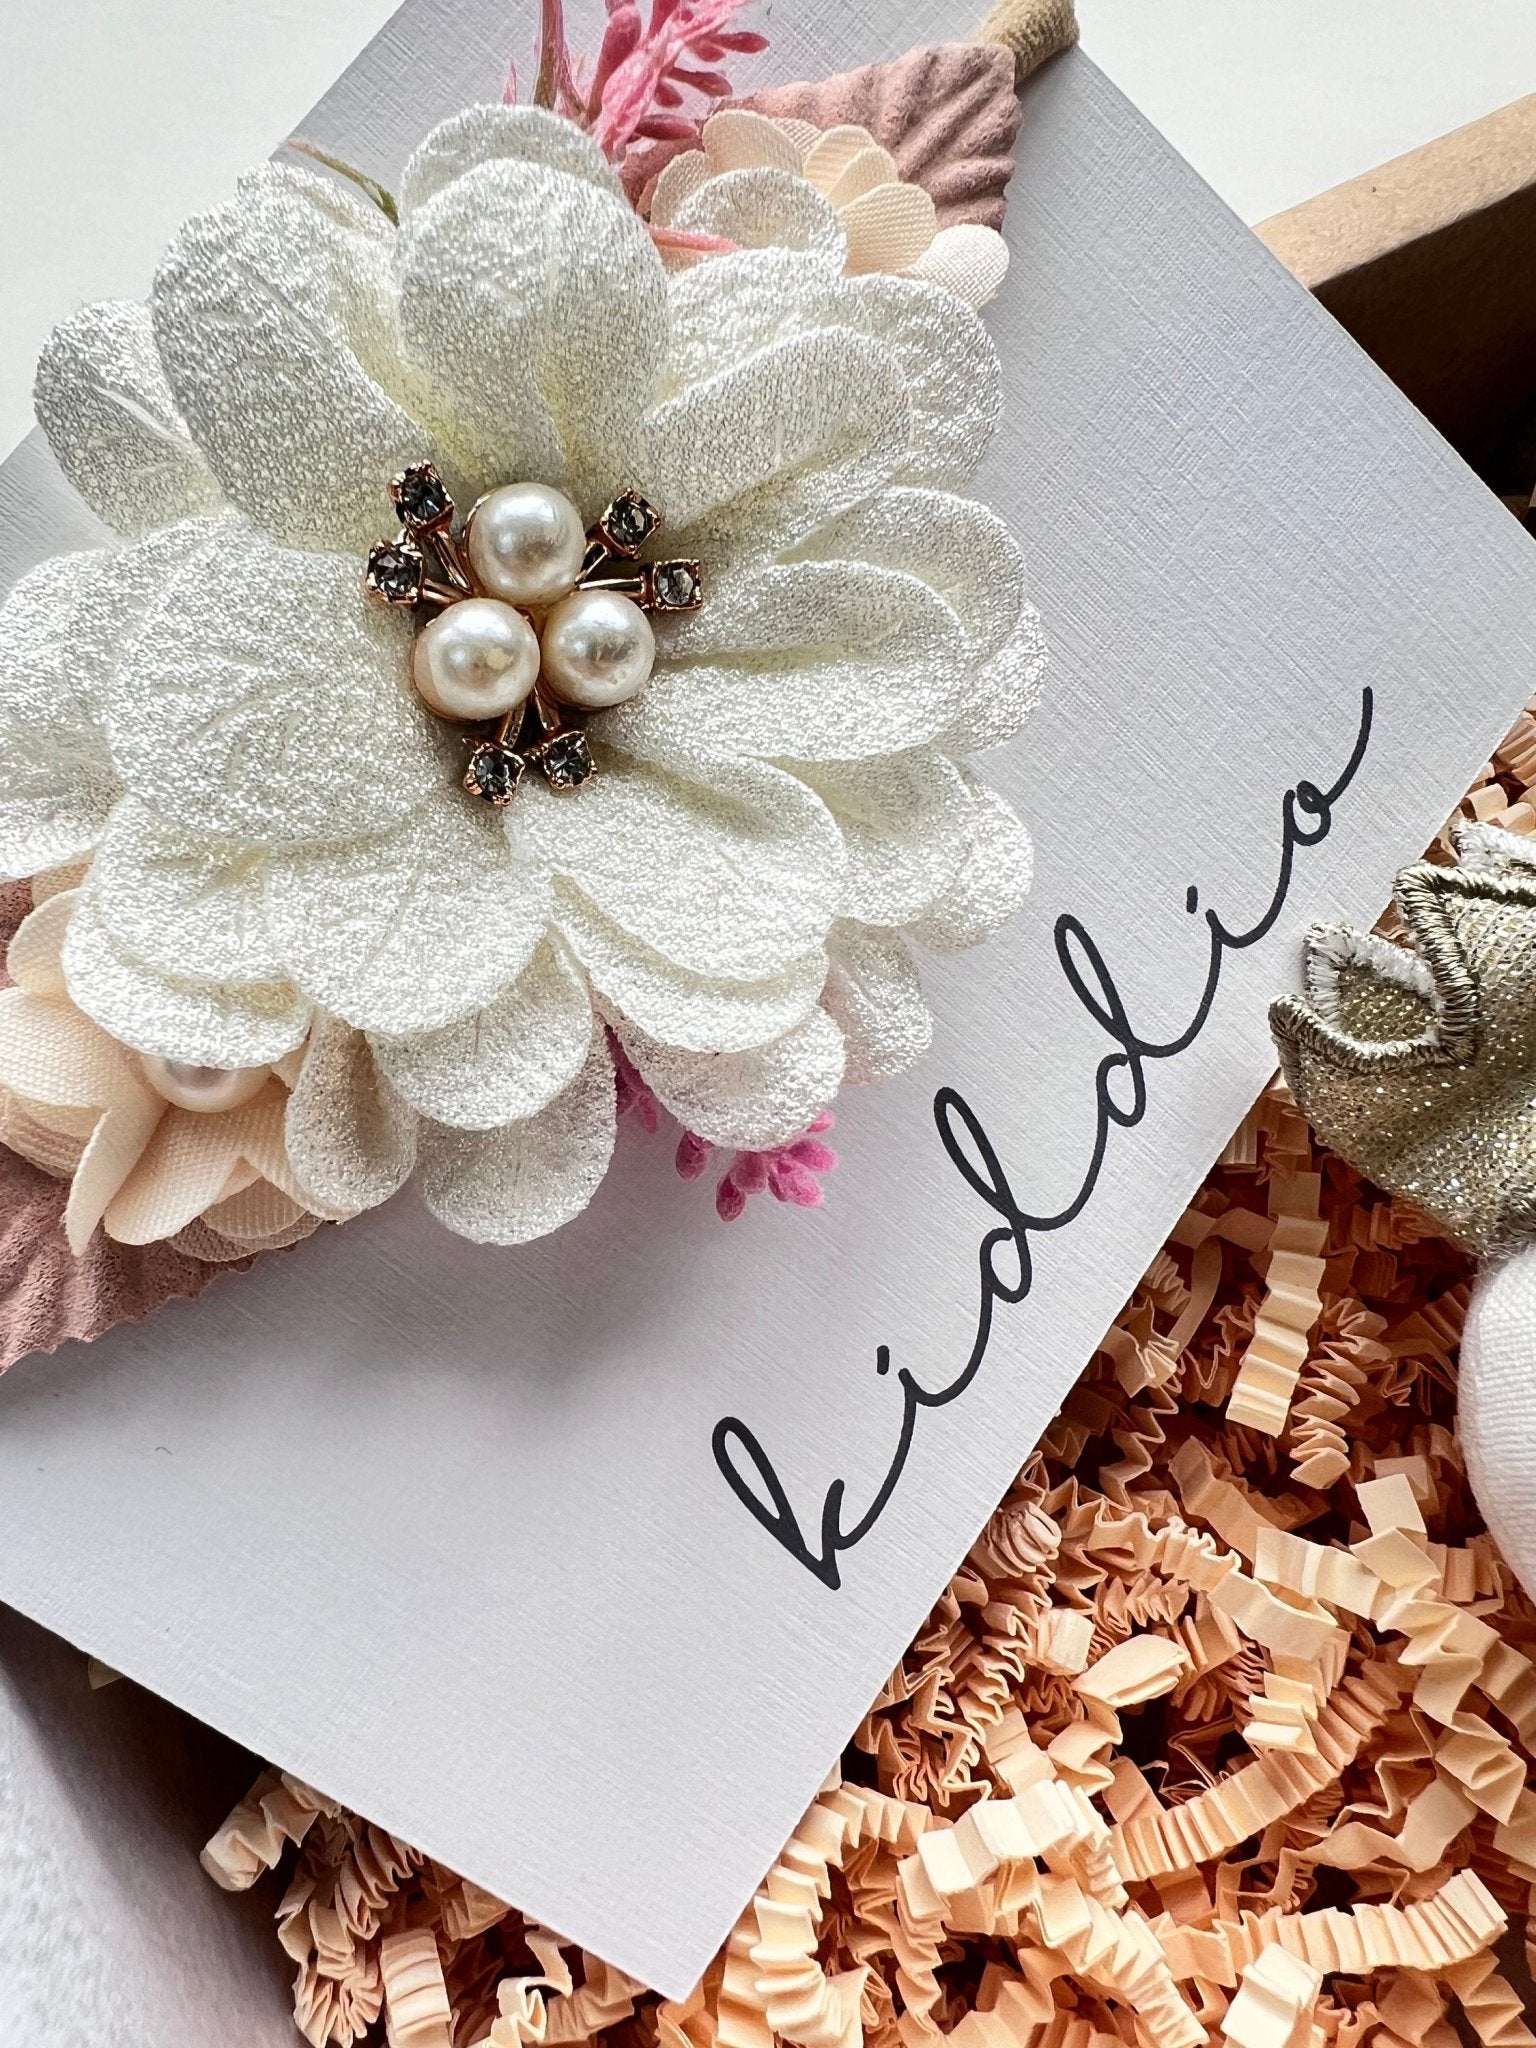 Flower Girl Proposal Personalised Gift Box SetKiddioGift Sets